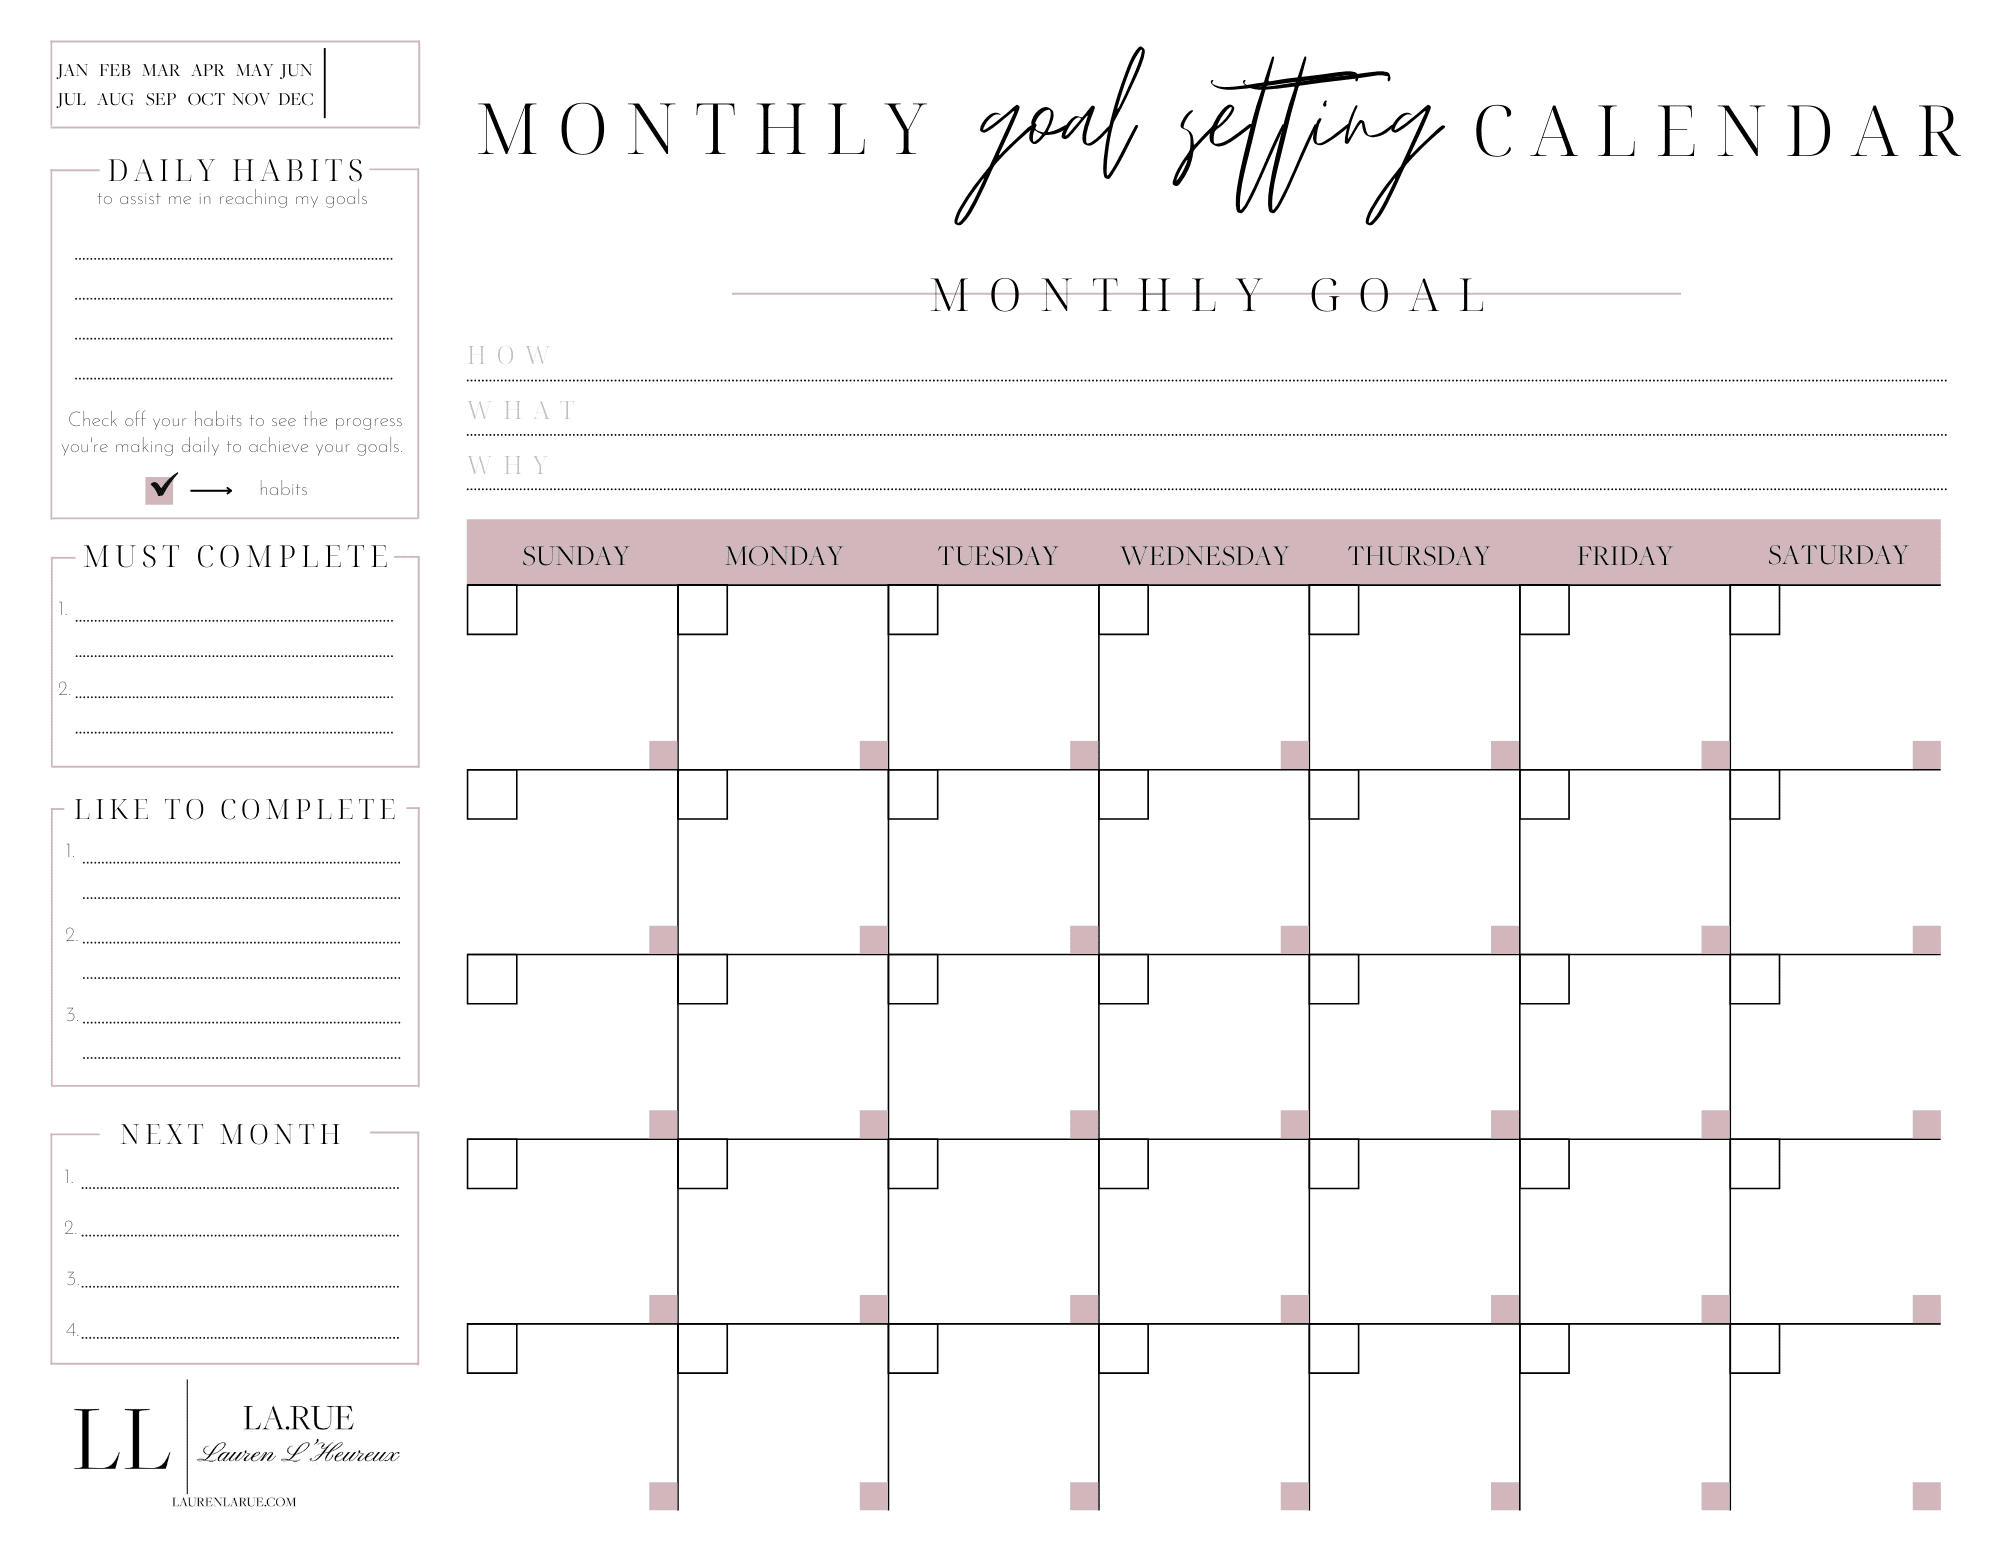 The Monthly Goal Calendar Freebie: Set Intentional Goals La Rue